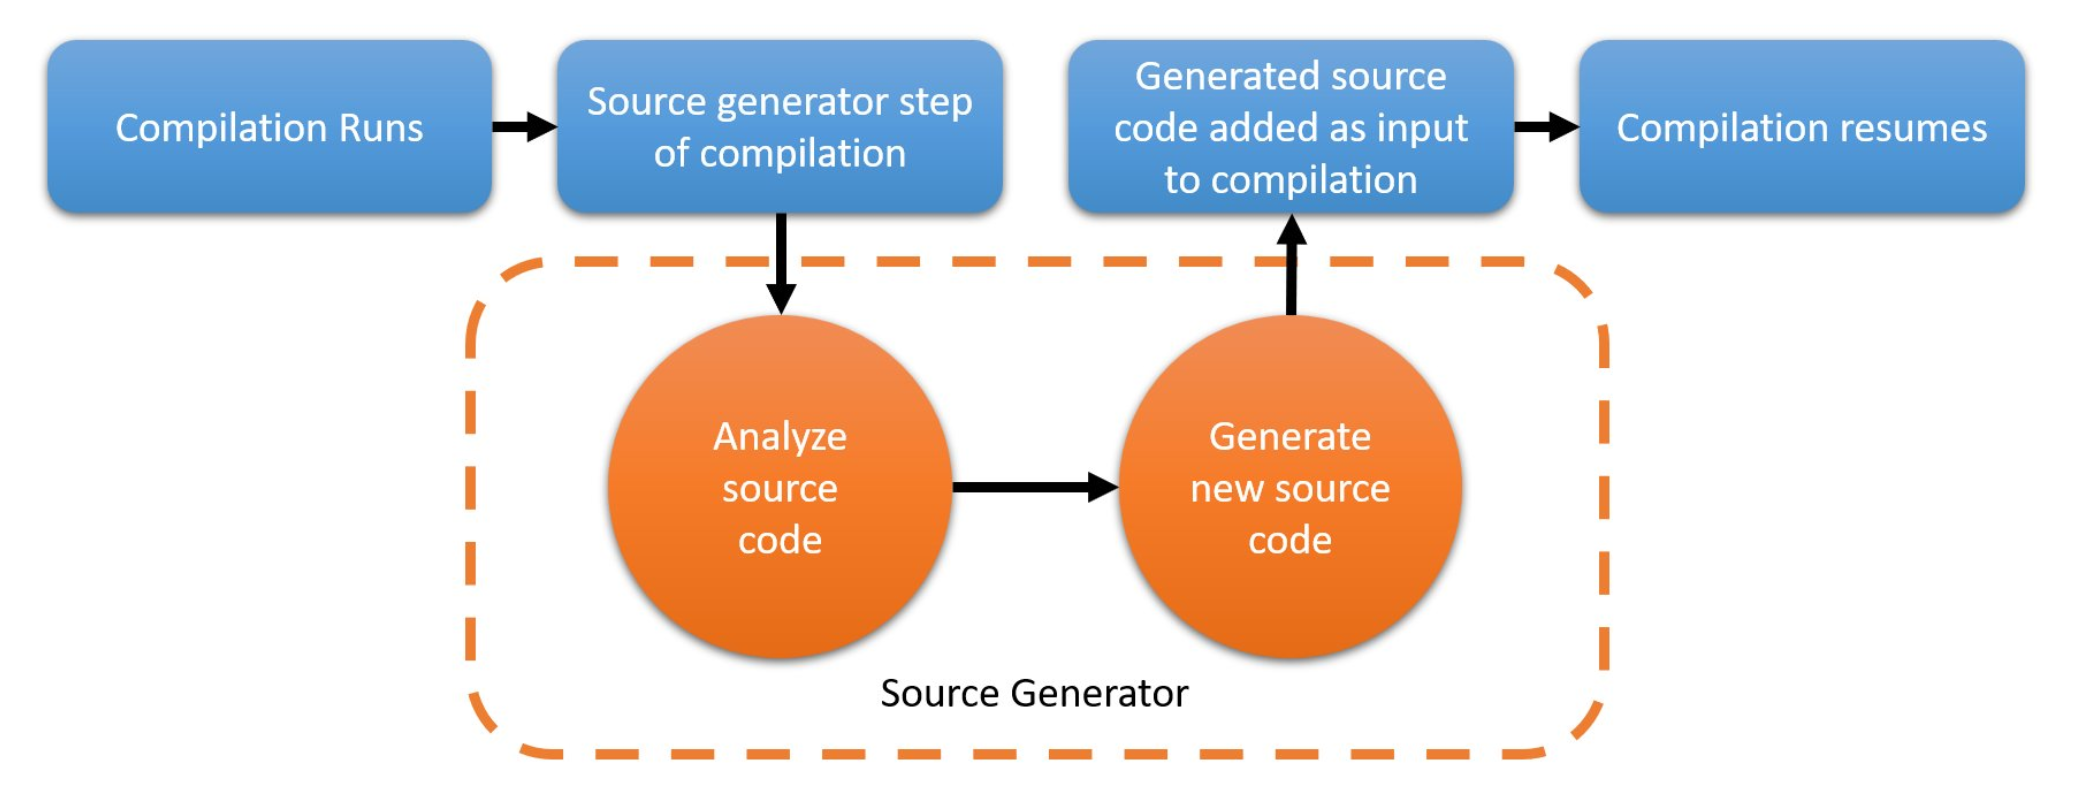 Source Generators - real world example